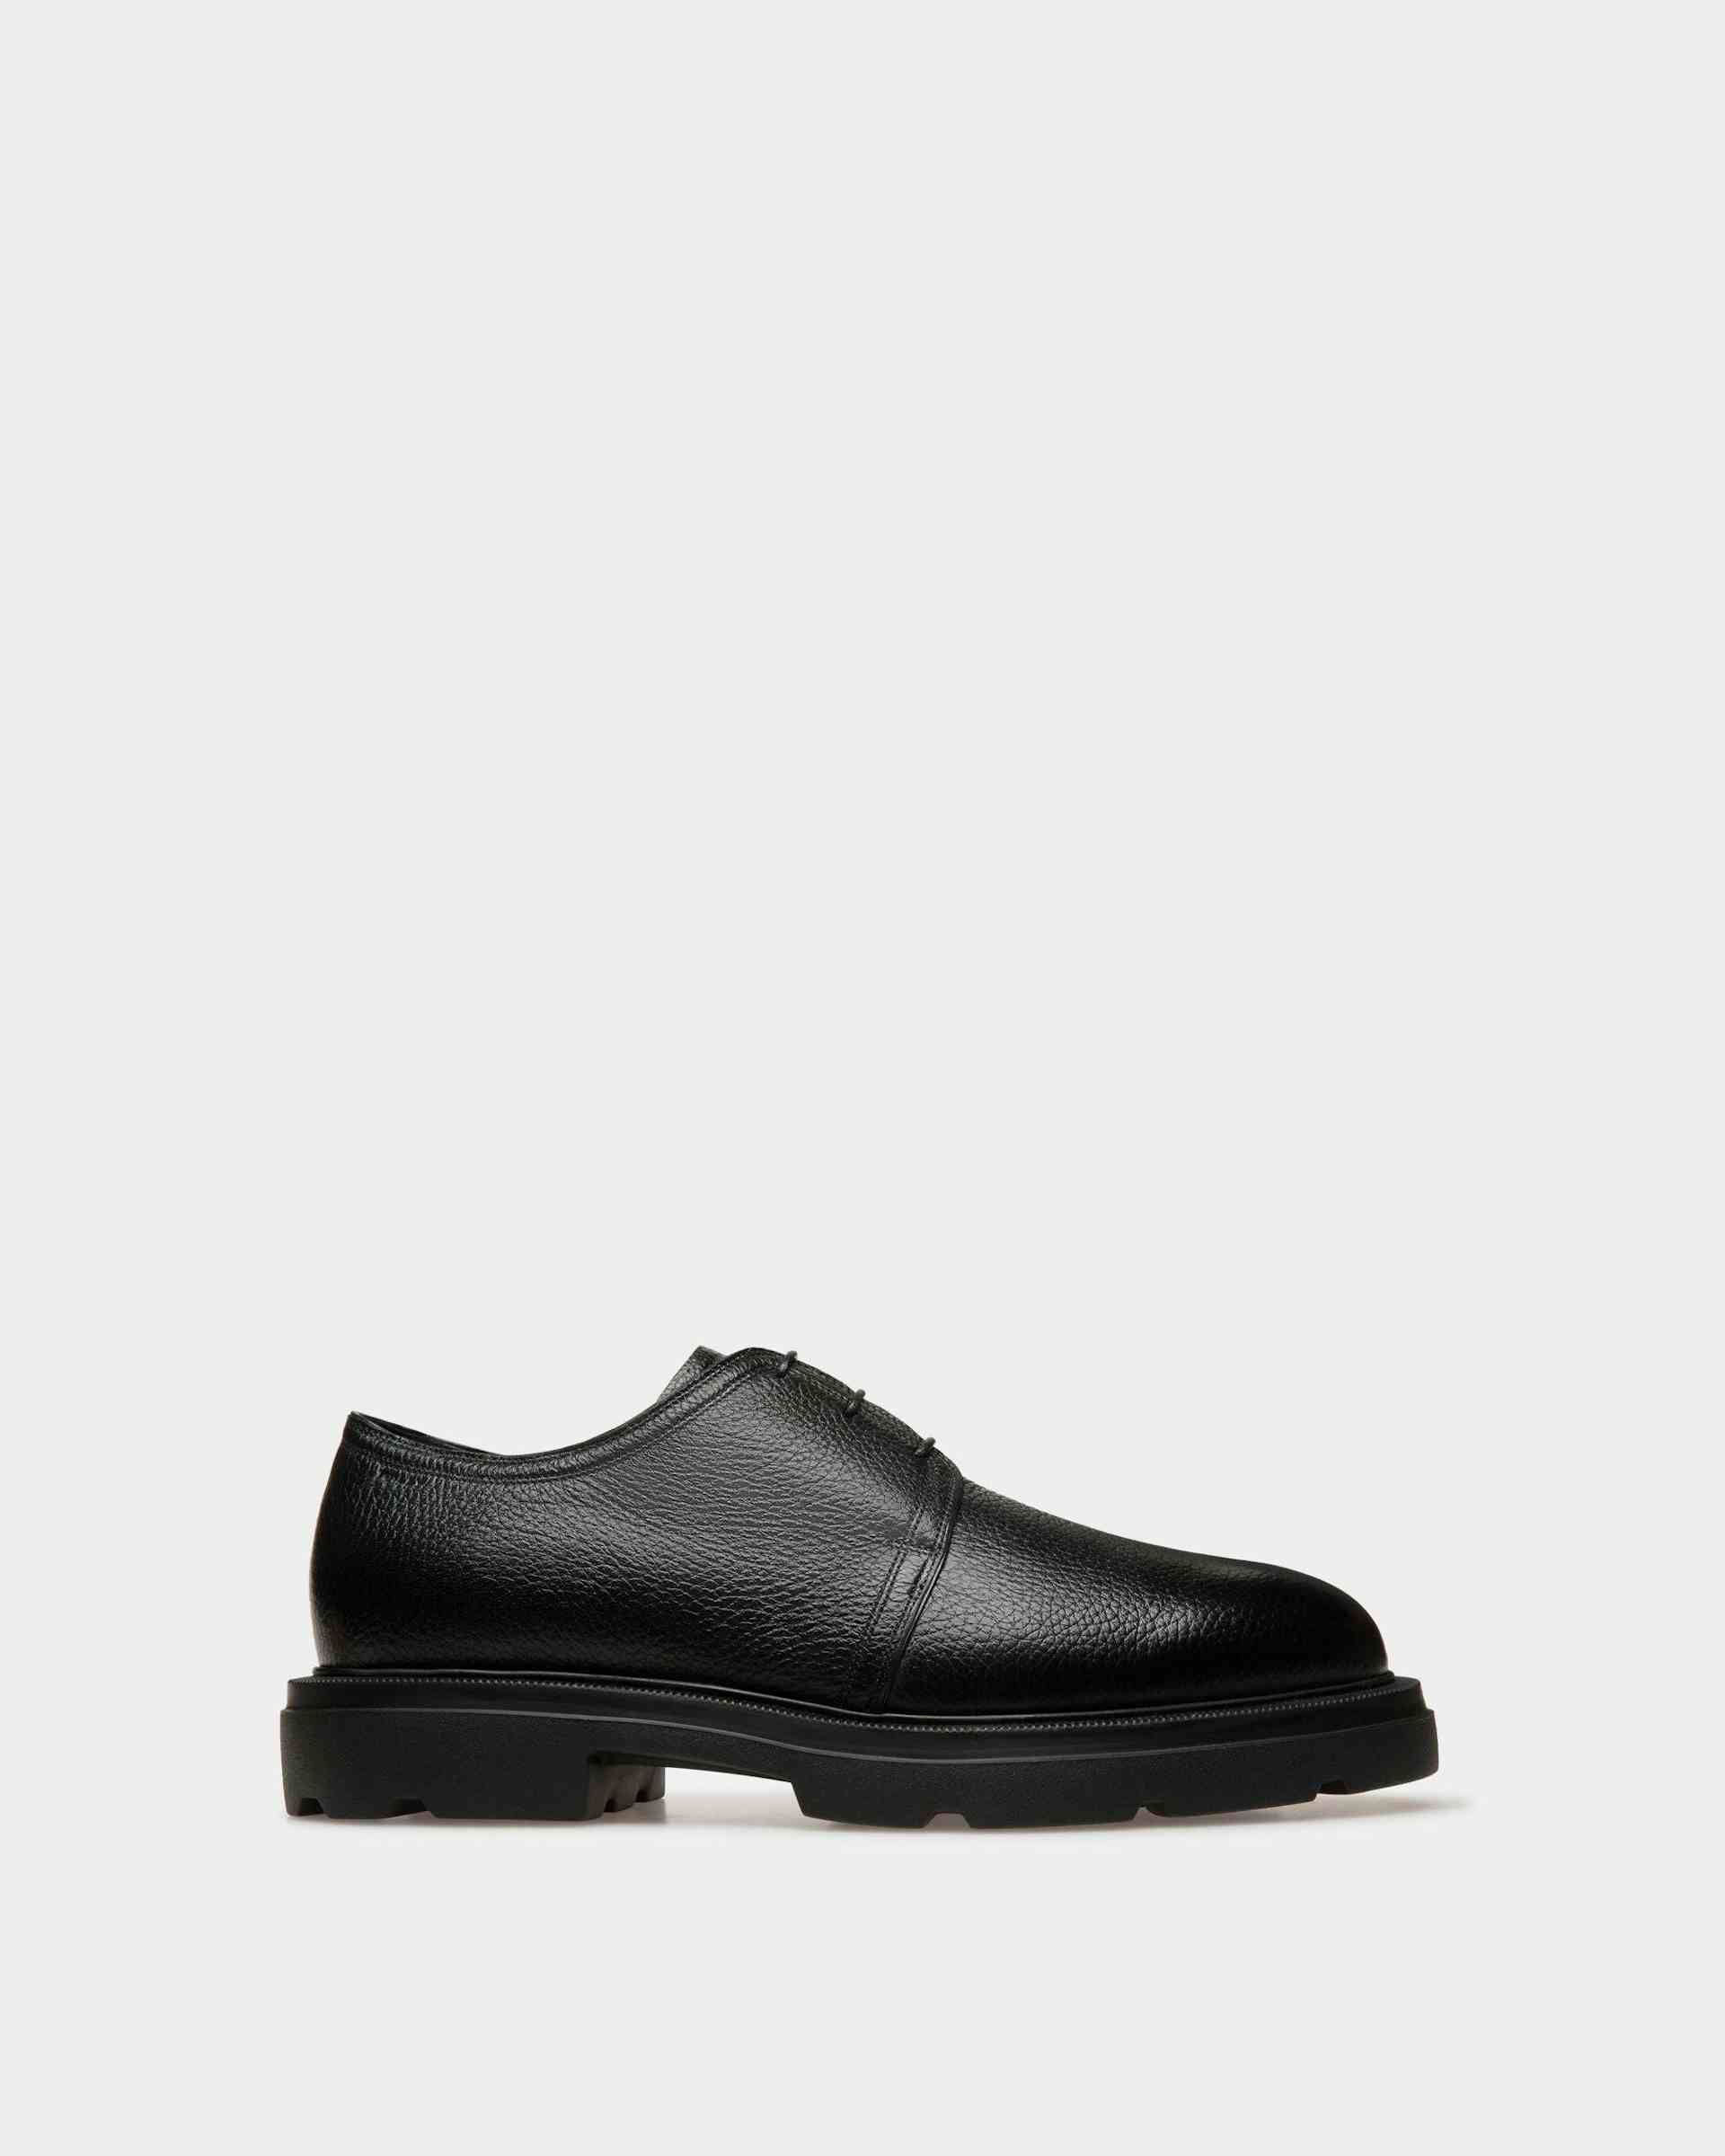 Zurich Derby Shoes In Black Leather - Men's - Bally